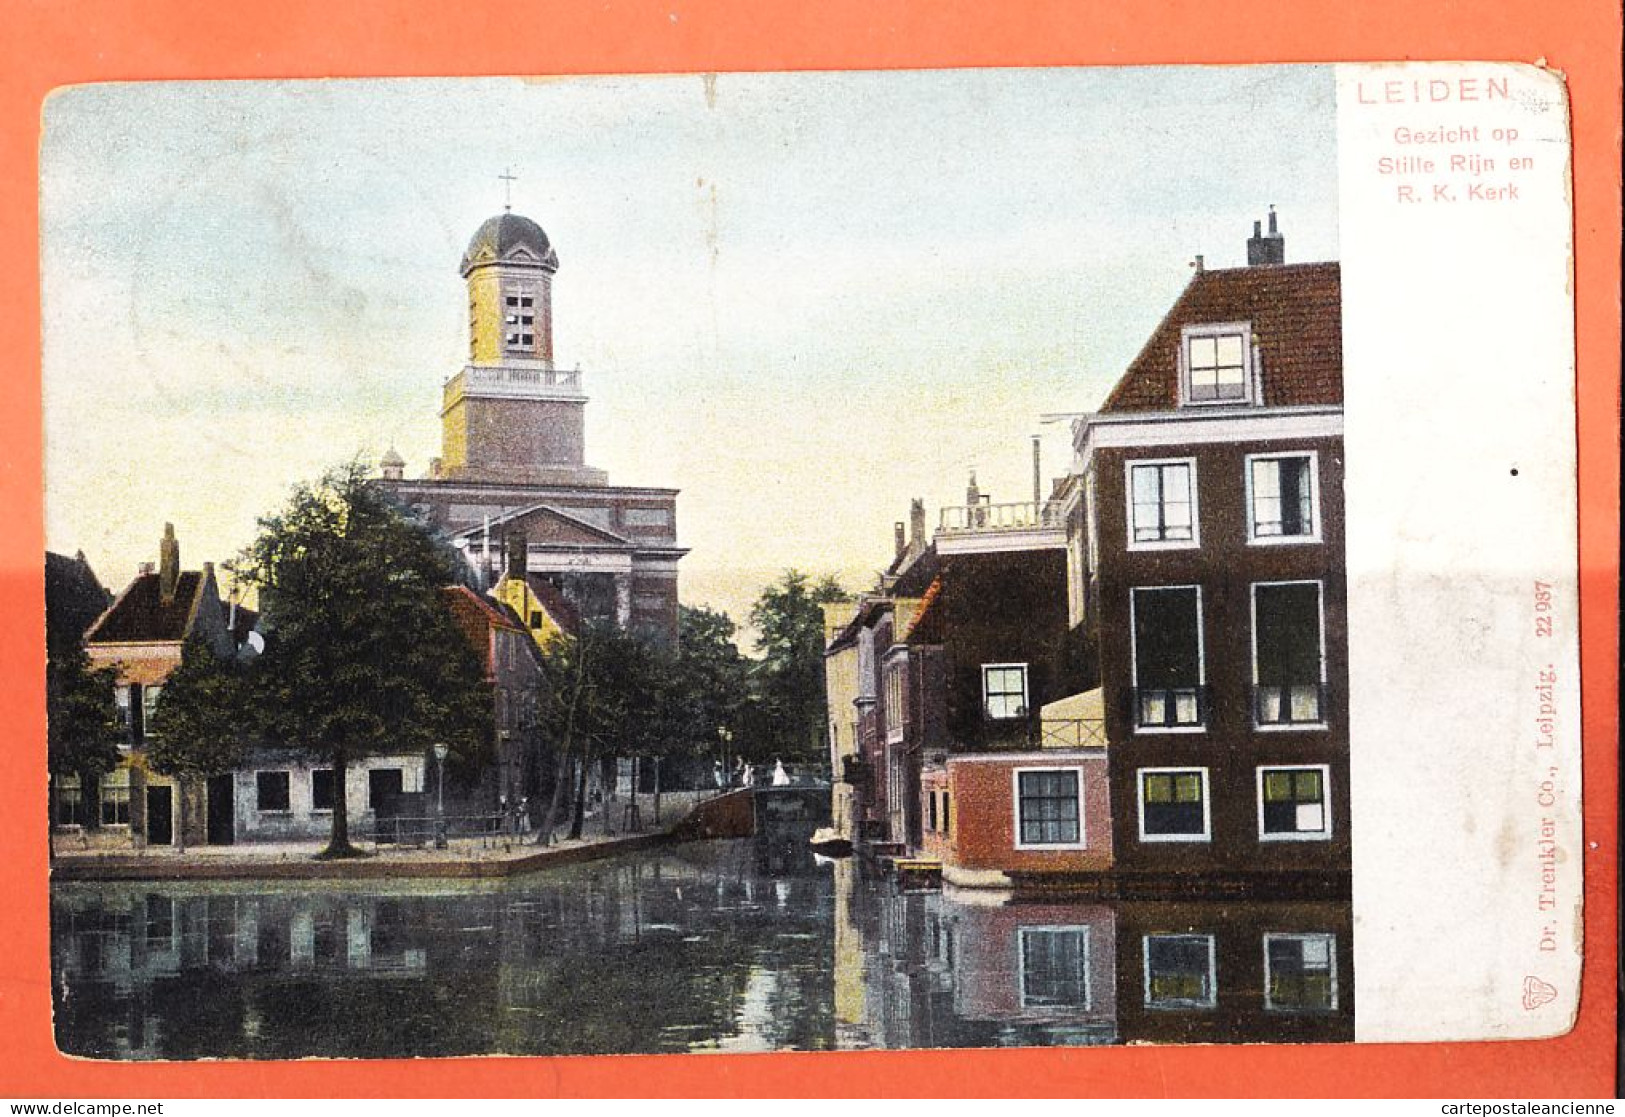 08978 / ⭐ LEIDEN Gezicht Op Stille Rijn En R.K Kerk 1908 à REGENT Villa Caprine Scheveningen-TRENKLER 22 937 Netherlands - Leiden